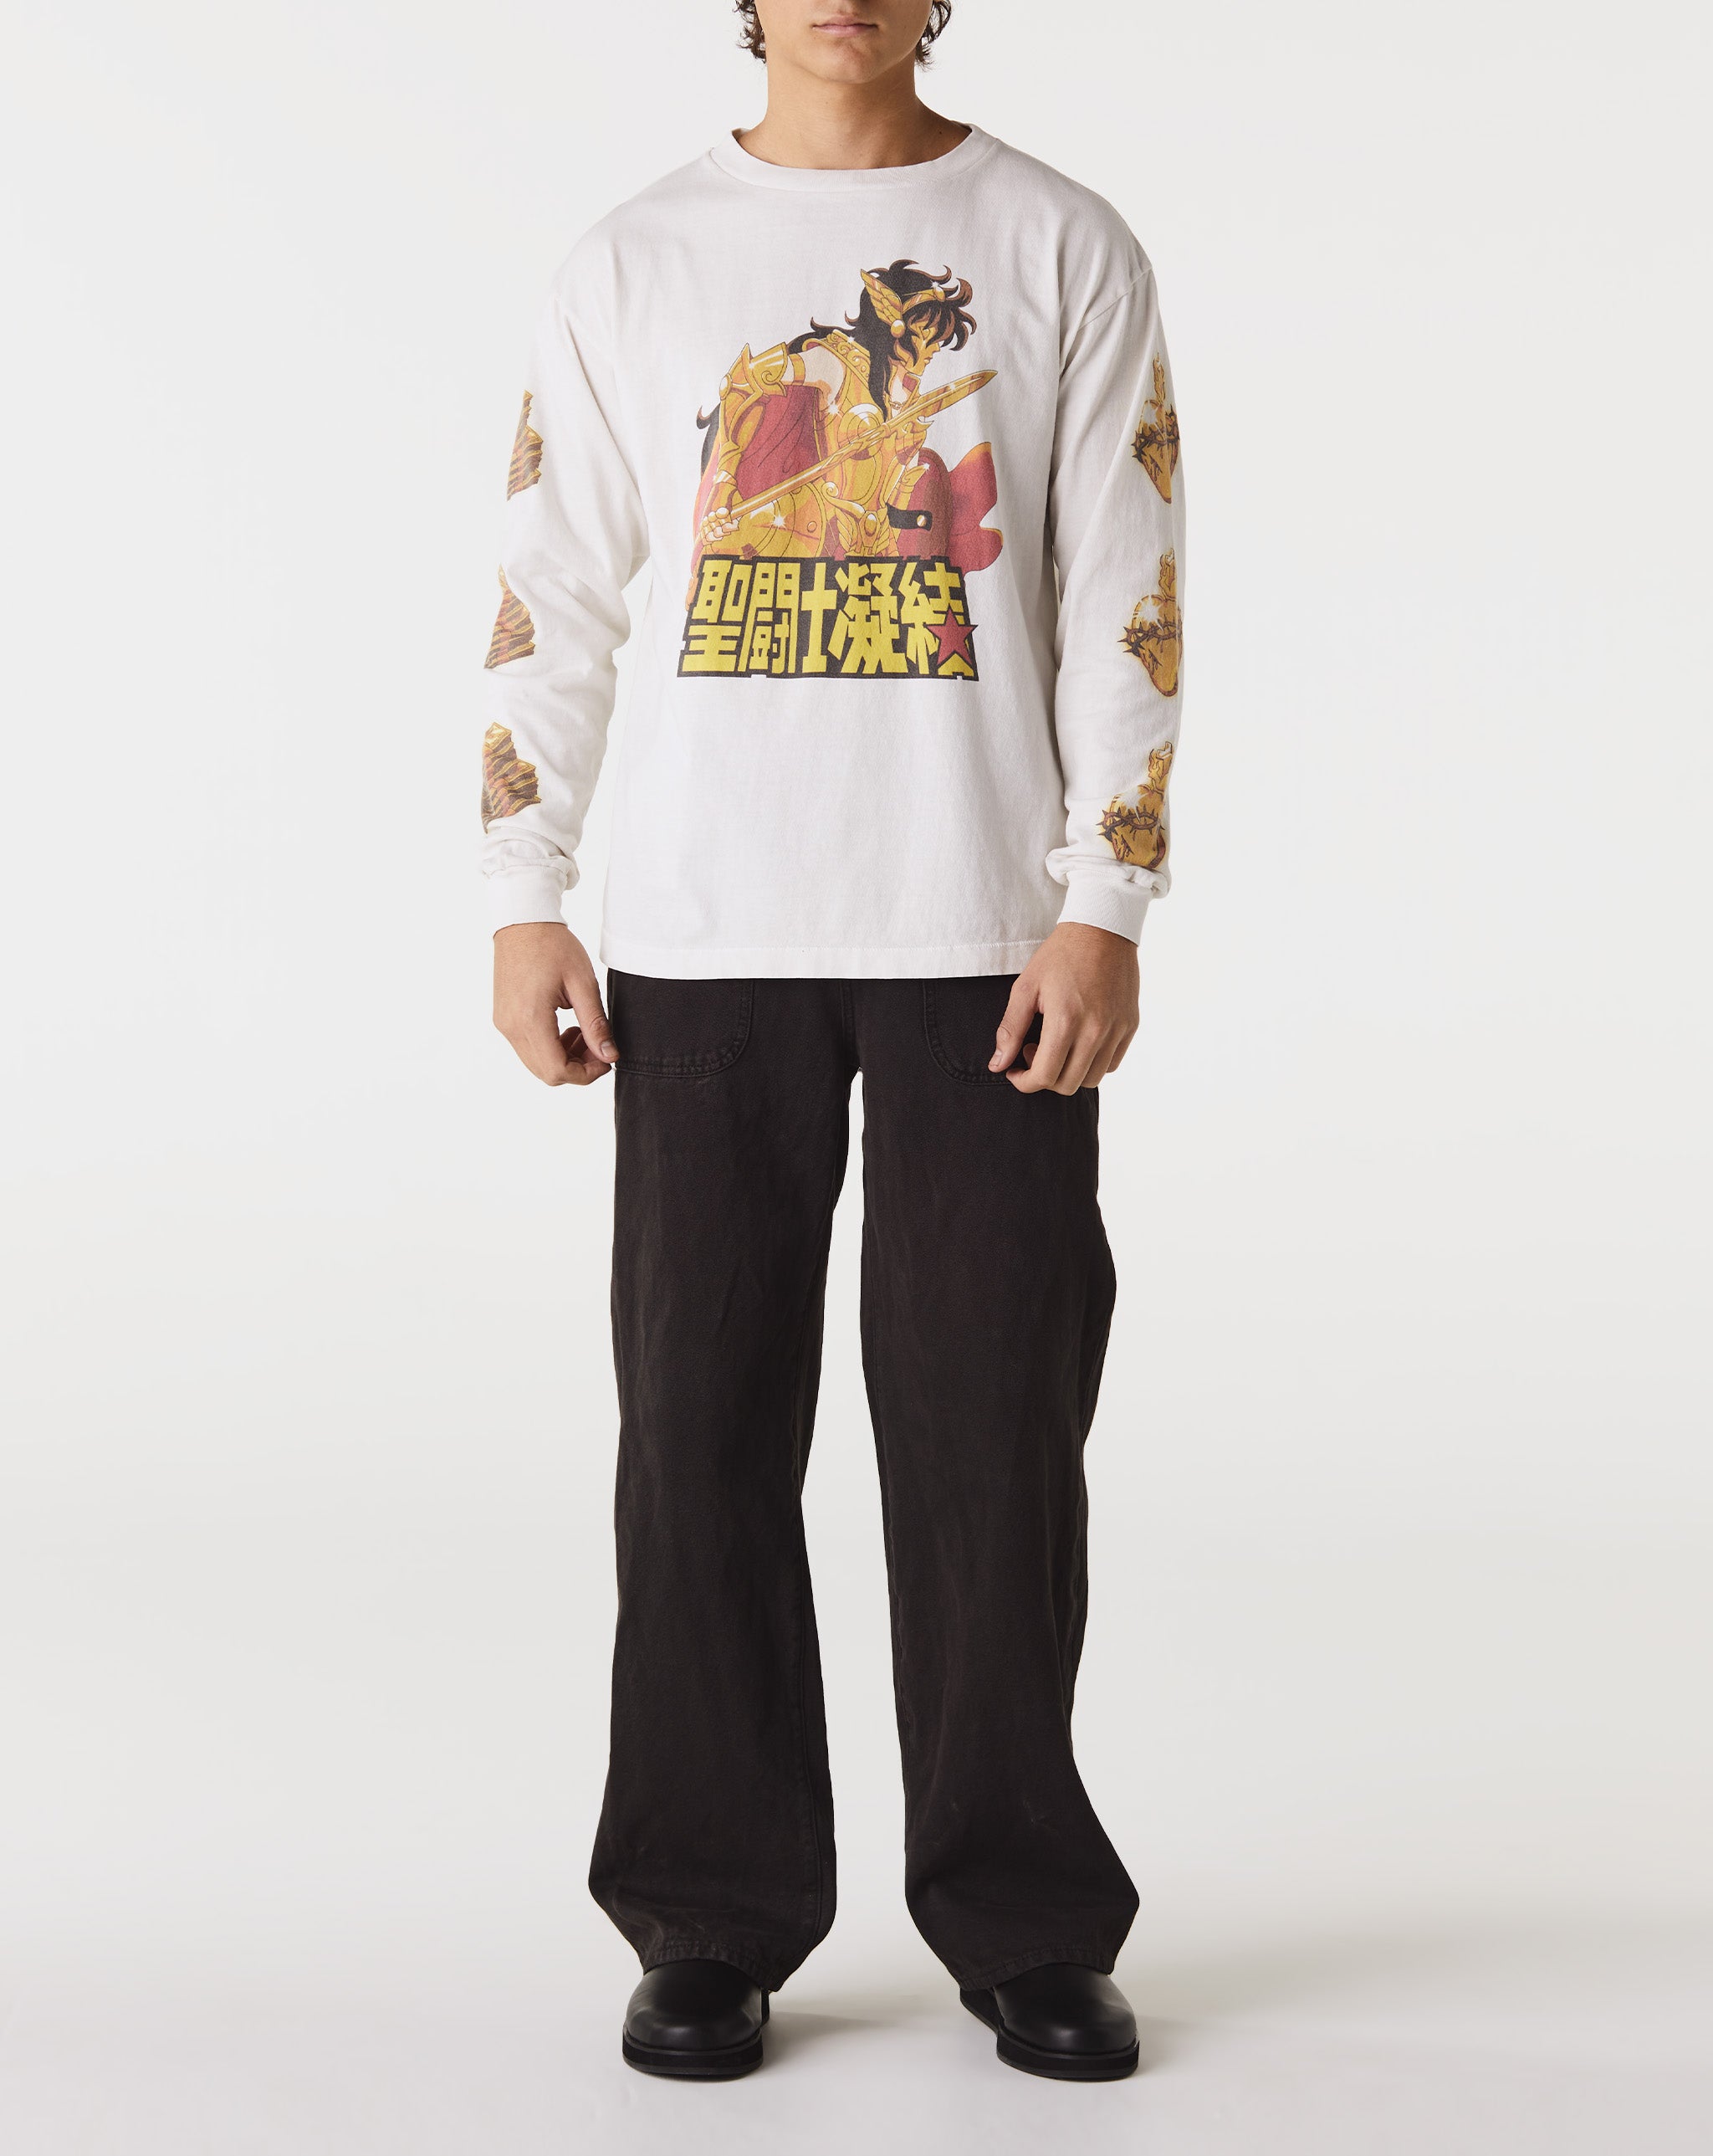 Saint Michael 聖闘士 Long Sleeve T-Shirt  - XHIBITION